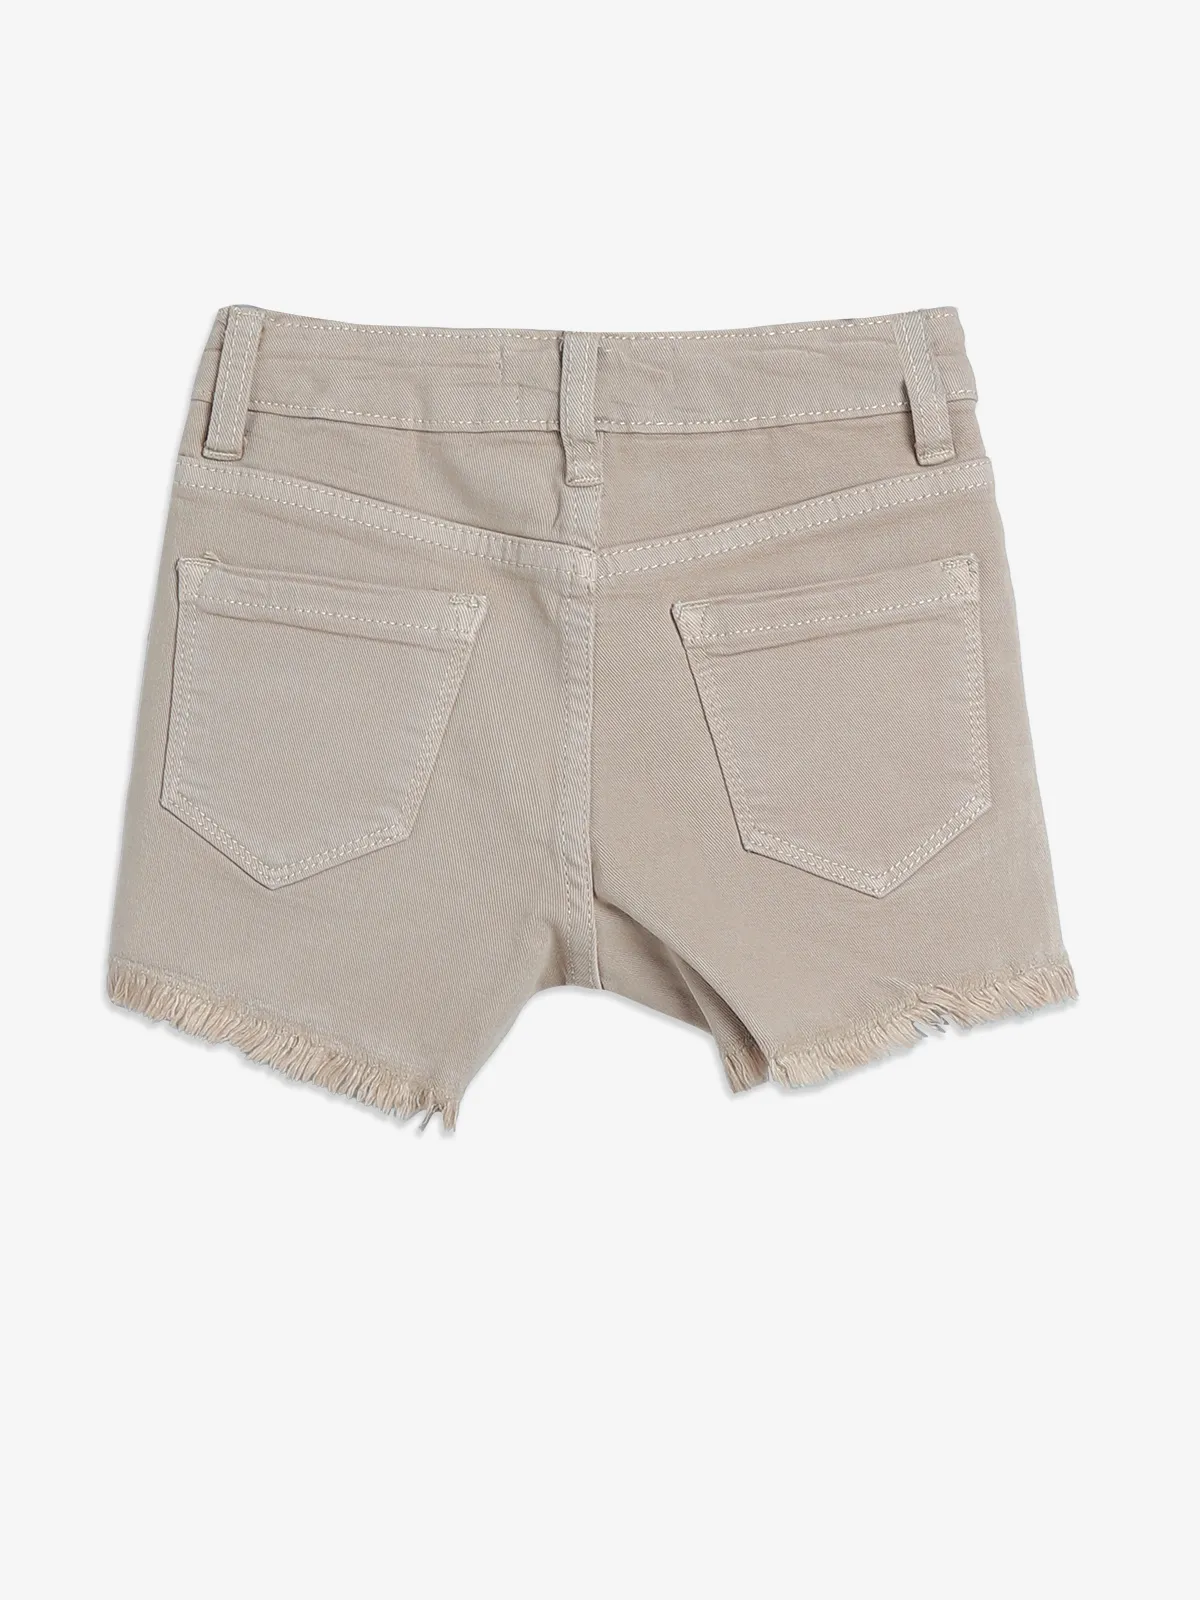 DEAL beige solid denim shorts